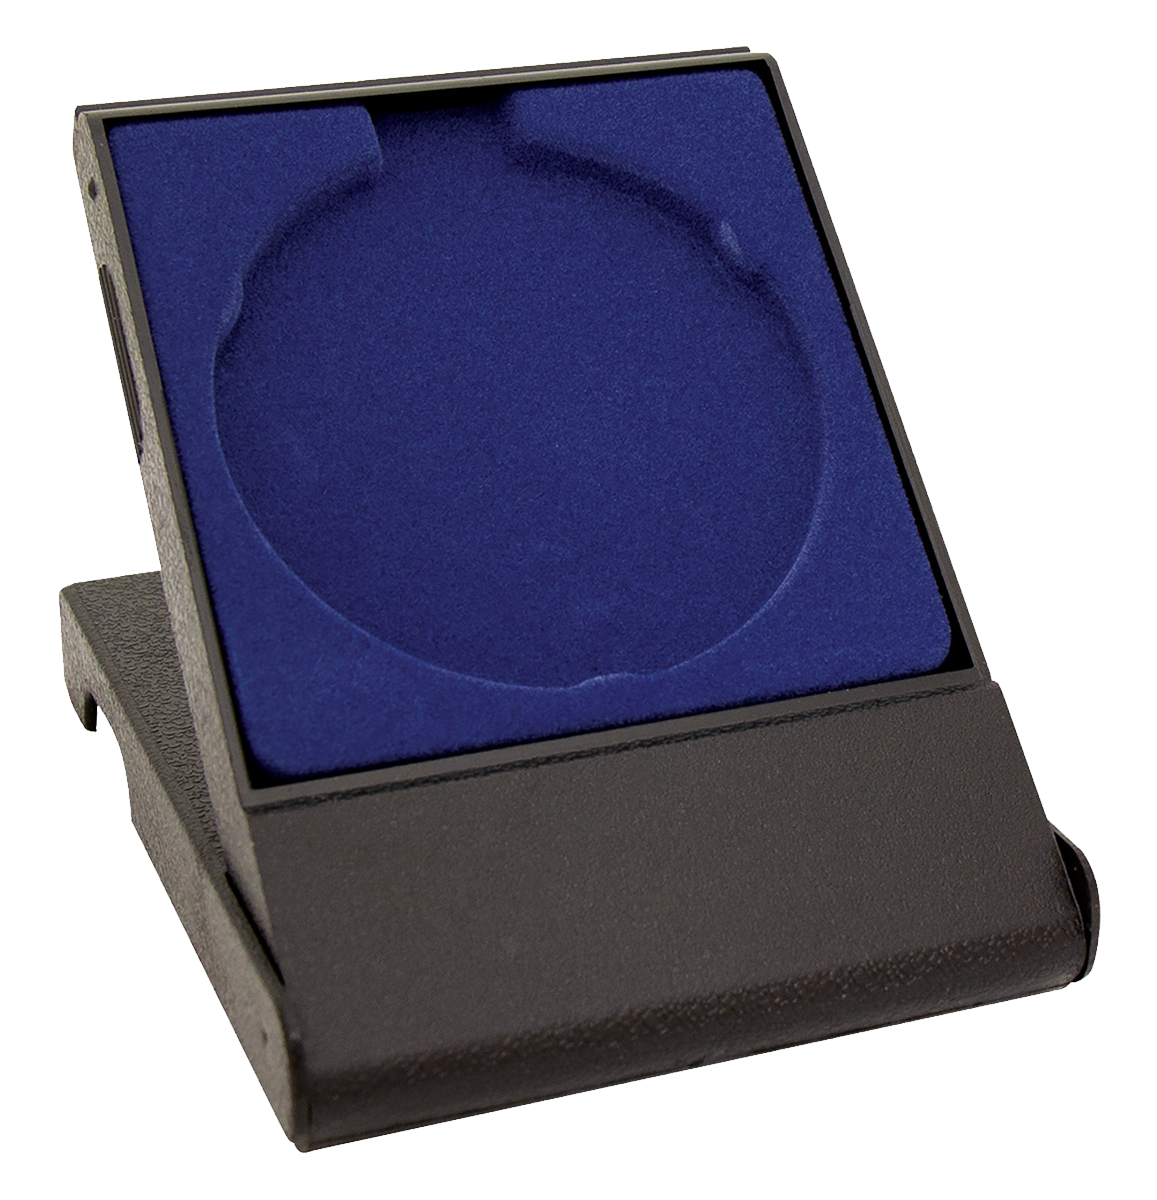 70mm Medal Box